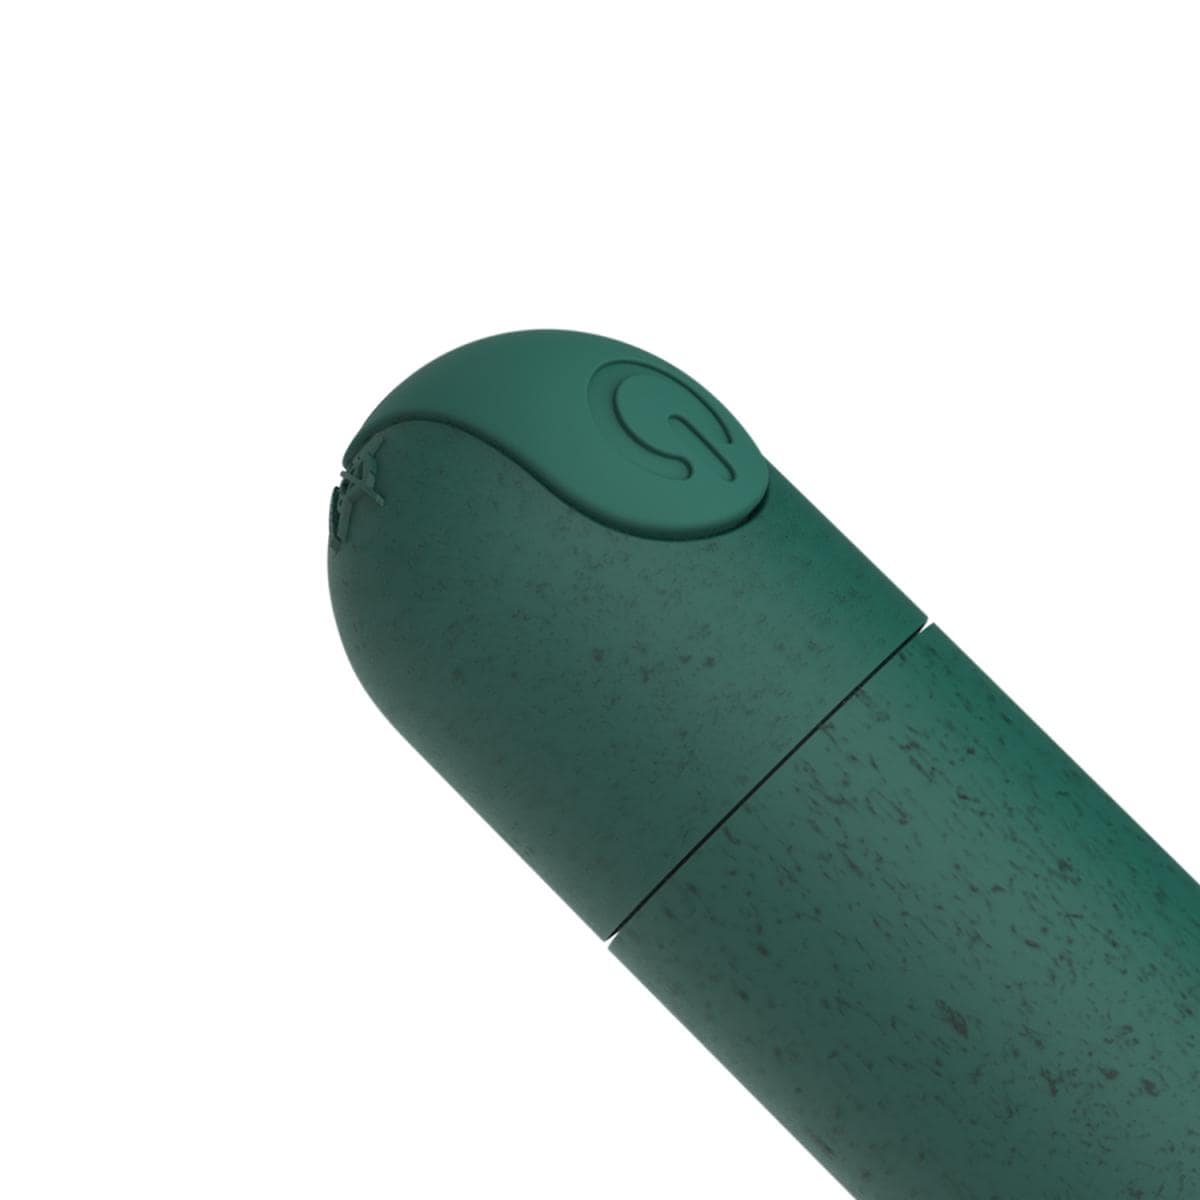 Gløv Eco Bullet Vibrator | Steuerung per Knopfdruck